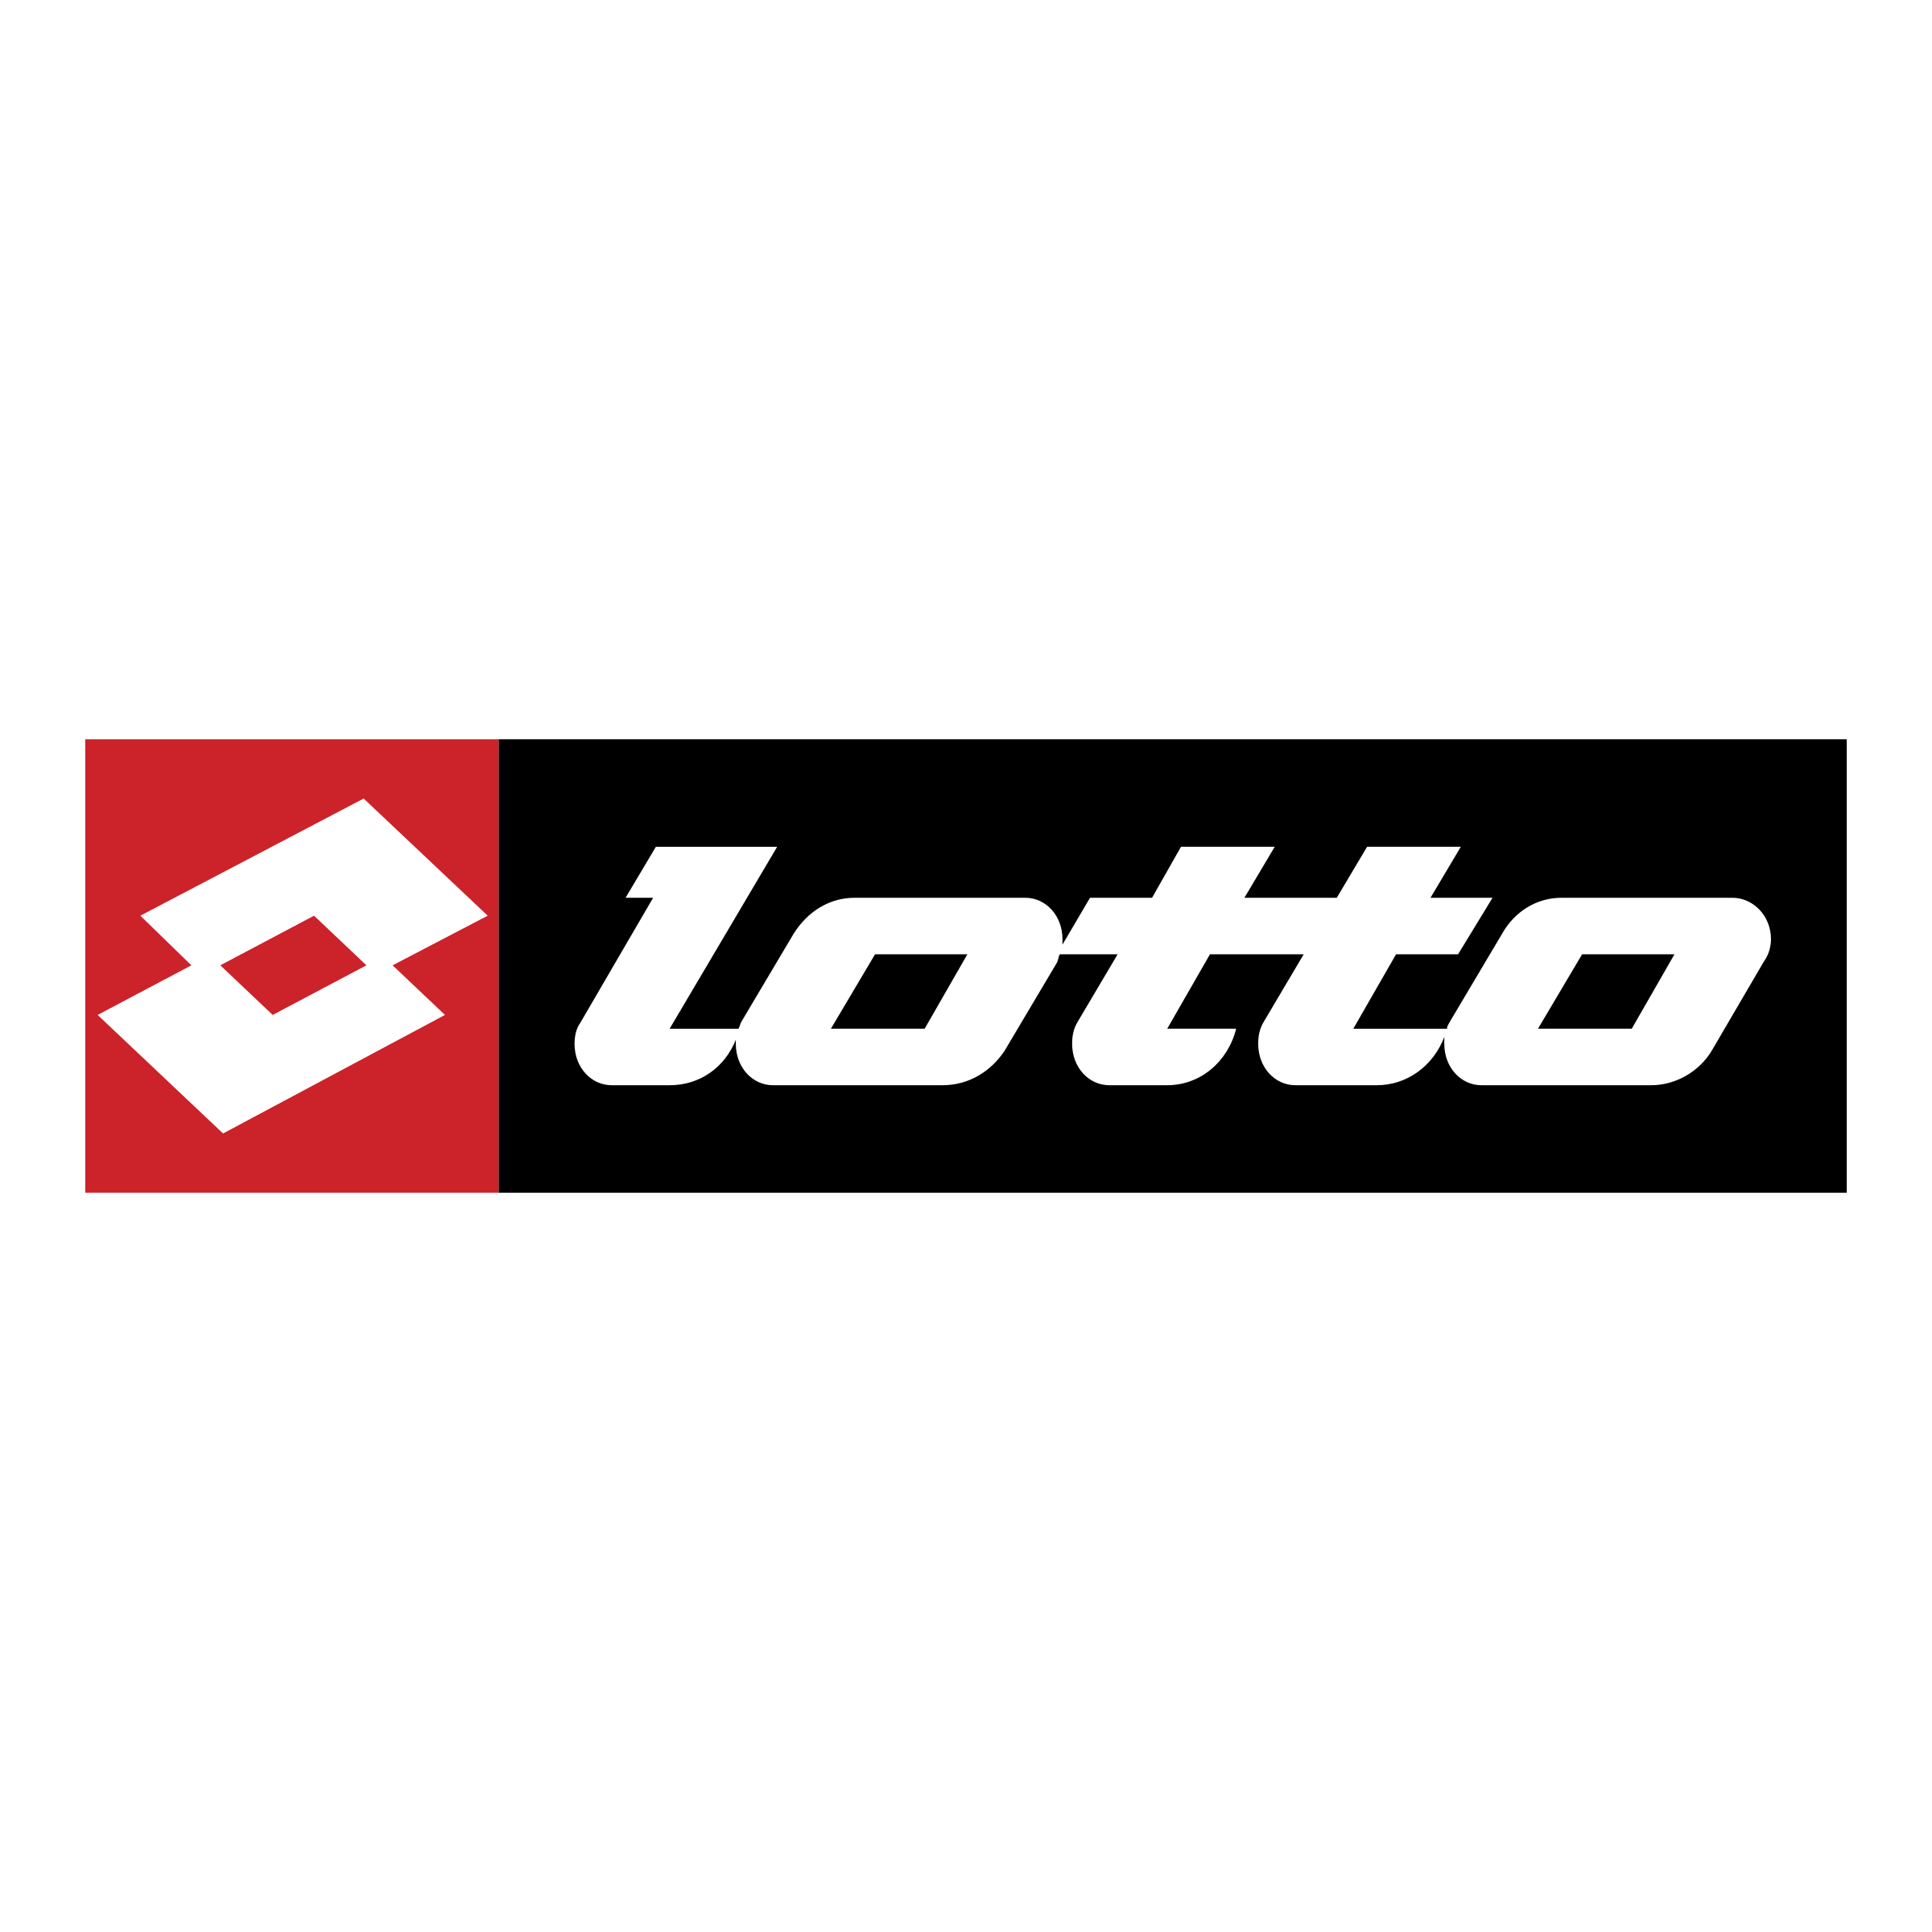 Lotto Logo - Lotto Logo PNG Transparent & SVG Vector